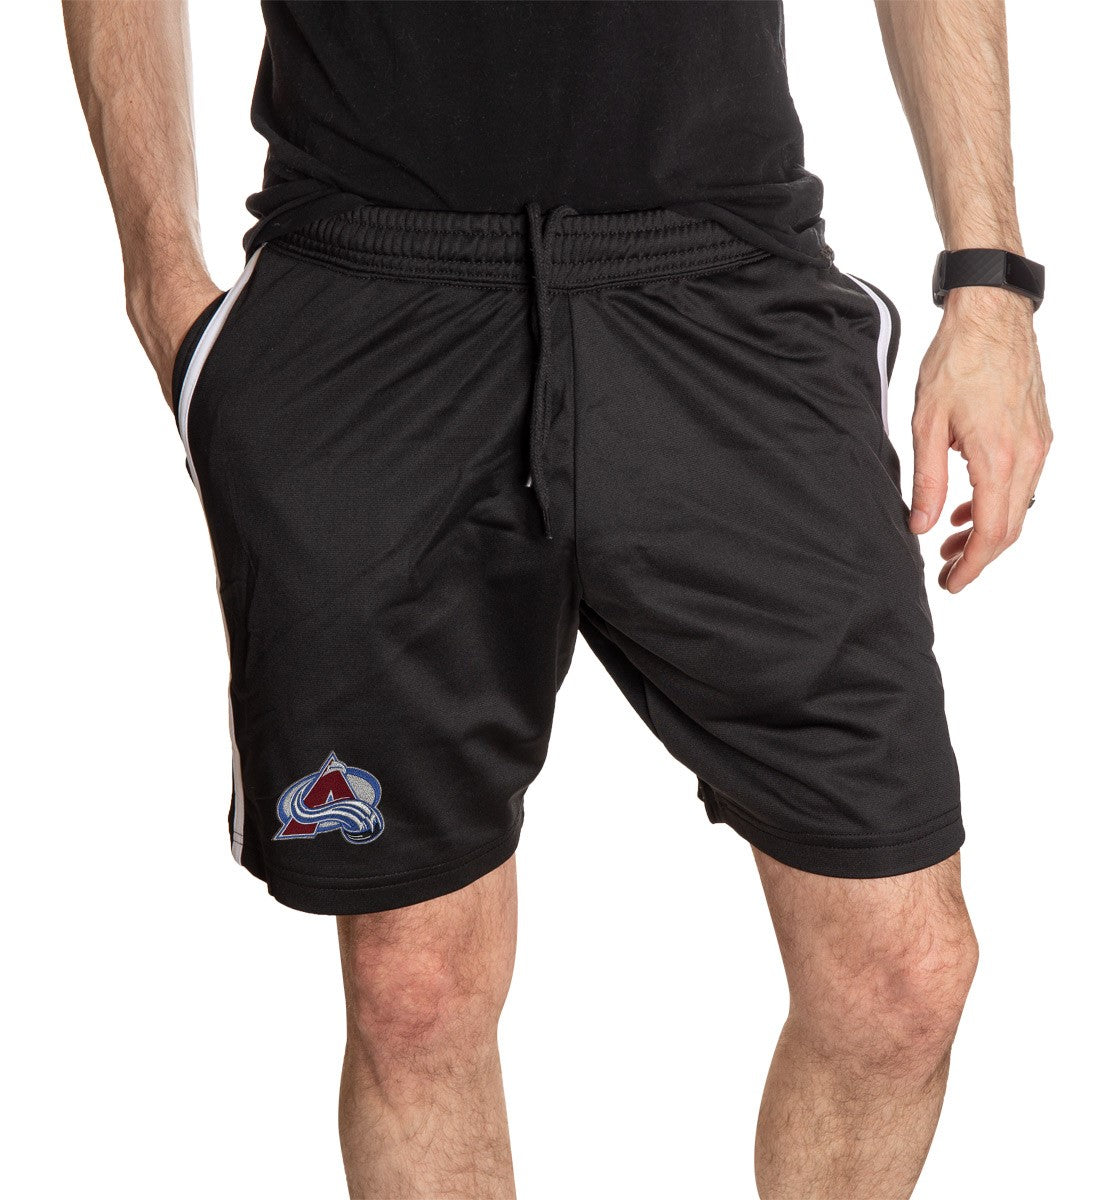 Colorado Avalanche Two-Stripe Shorts for Men